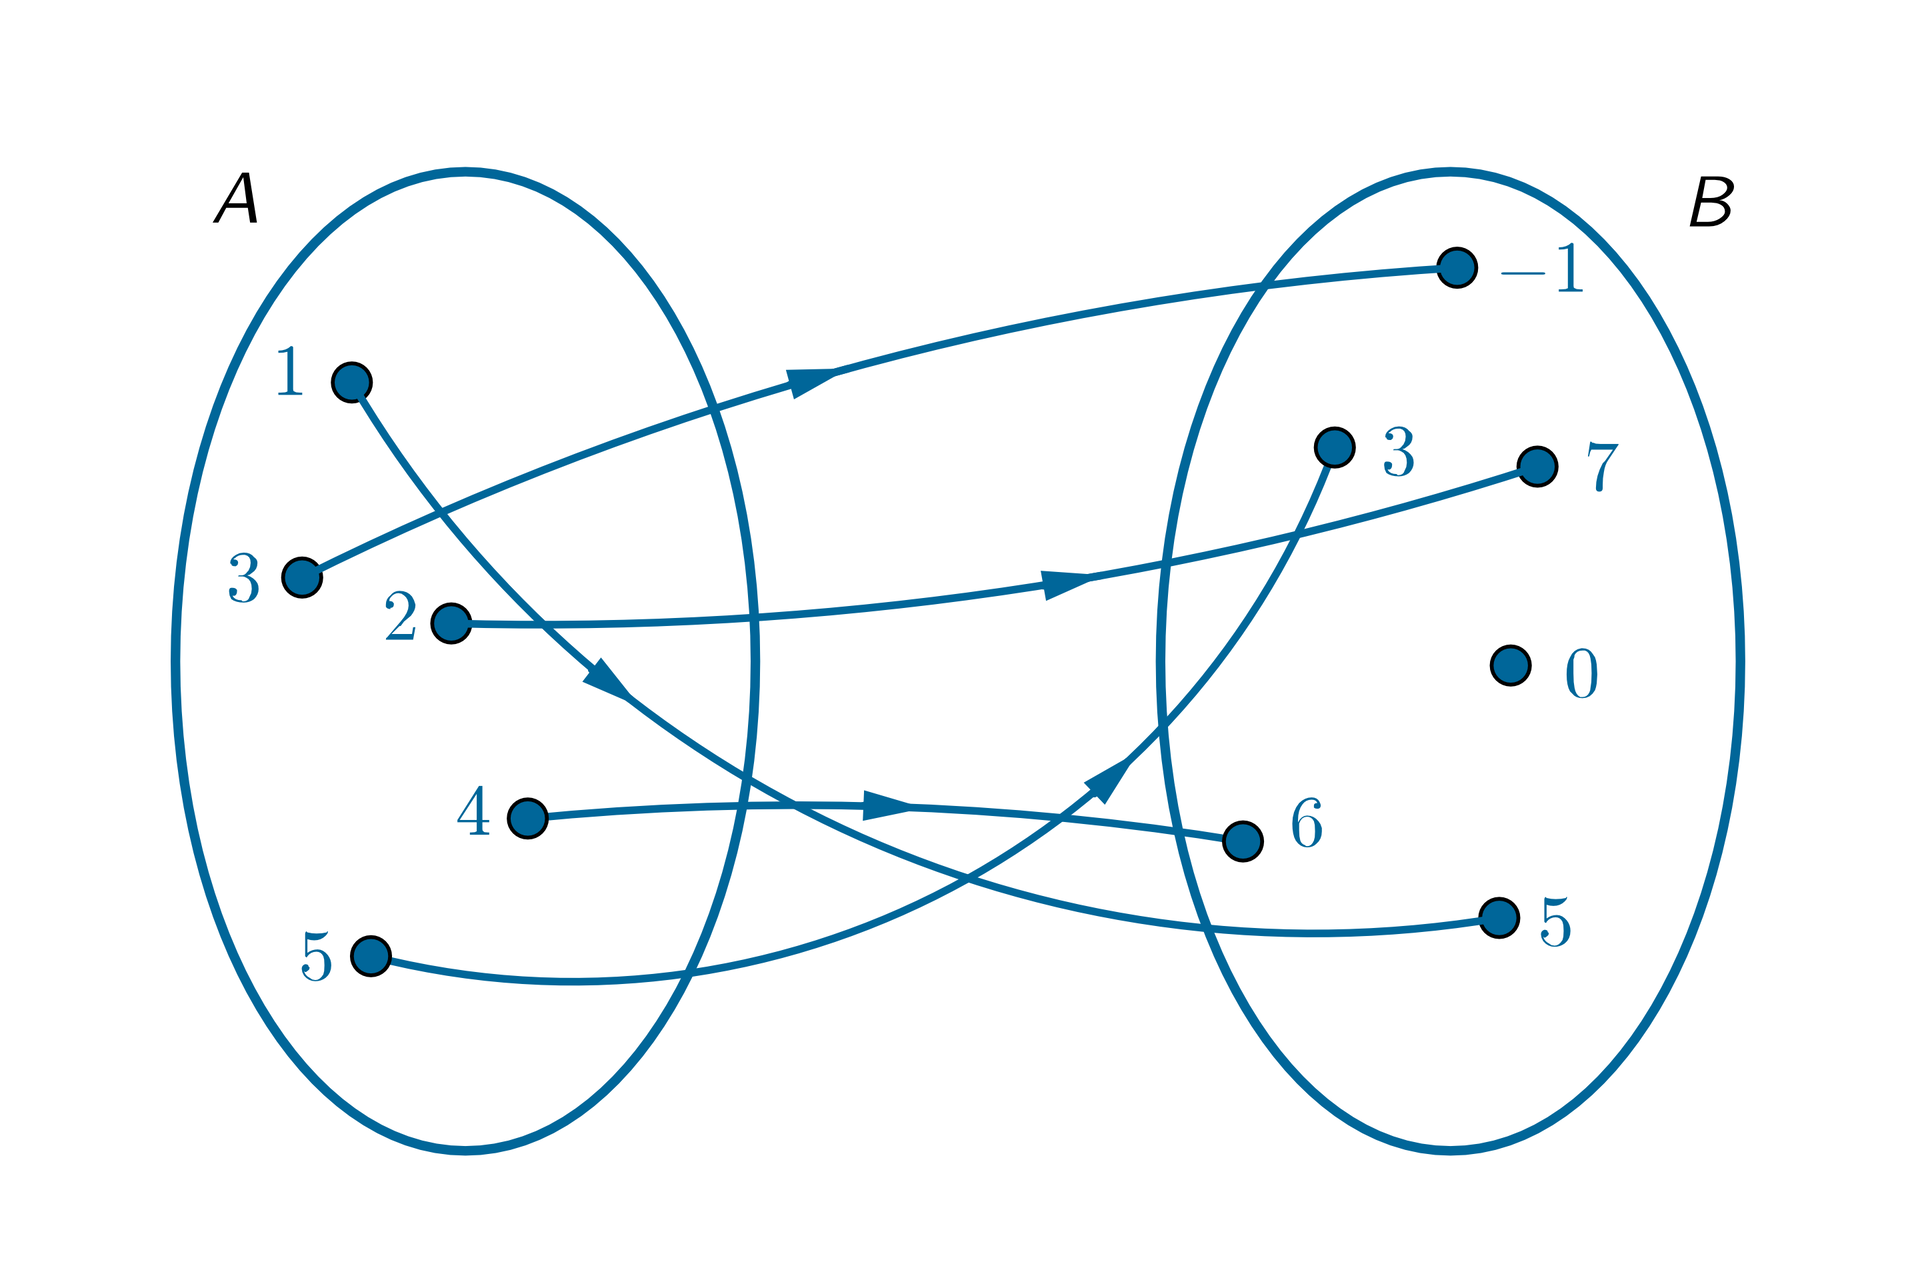 Graf pokazuje zbiór A ={1, 2, 3, 4, 5}. Zbiór B ={-1, 0, 3, 5, 6, 7}. Argumentowi 1 przyporządkowano wartość 5. Argumentowi 2 przyporządkowano wartość 7. Argumentowi 3 przyporządkowano wartość -1. Argumentowi 4 przyporządkowano wartość 6. Argumentowi 5 przyporządkowano wartość 3.